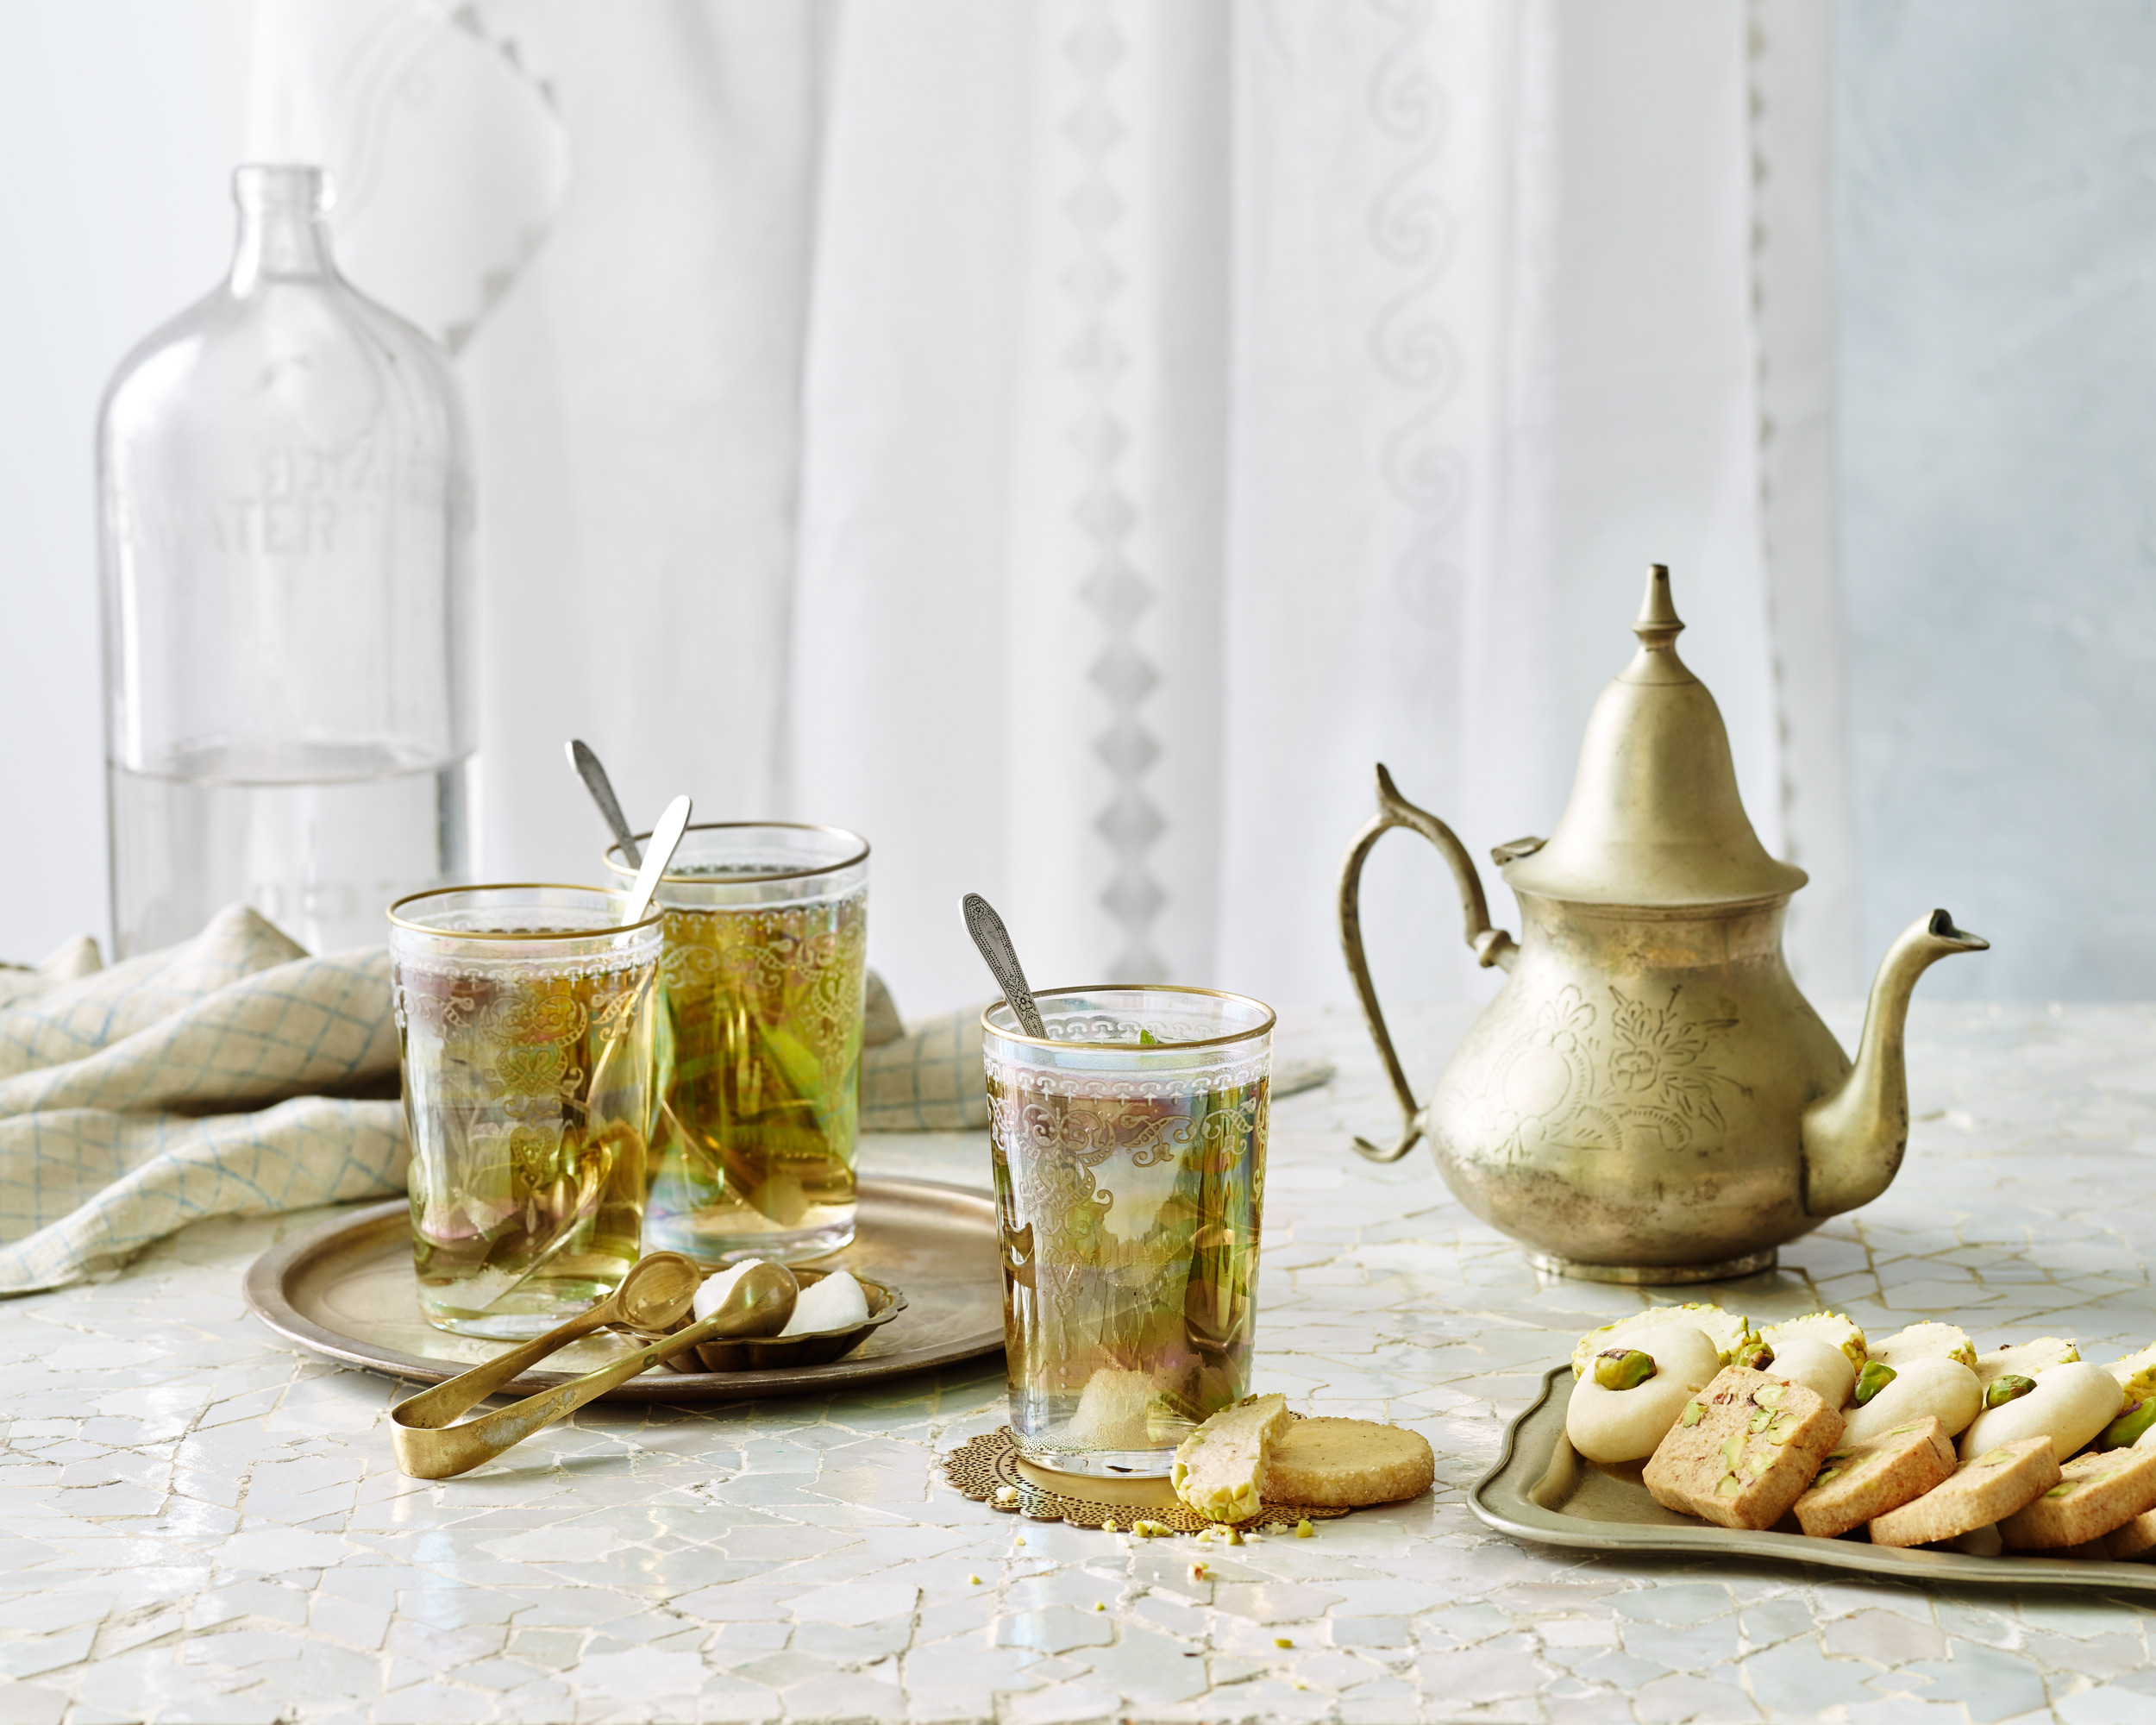 Annabelle_Breakey_Beverage_Photographer_Food_Photography_Moroccan-Tea